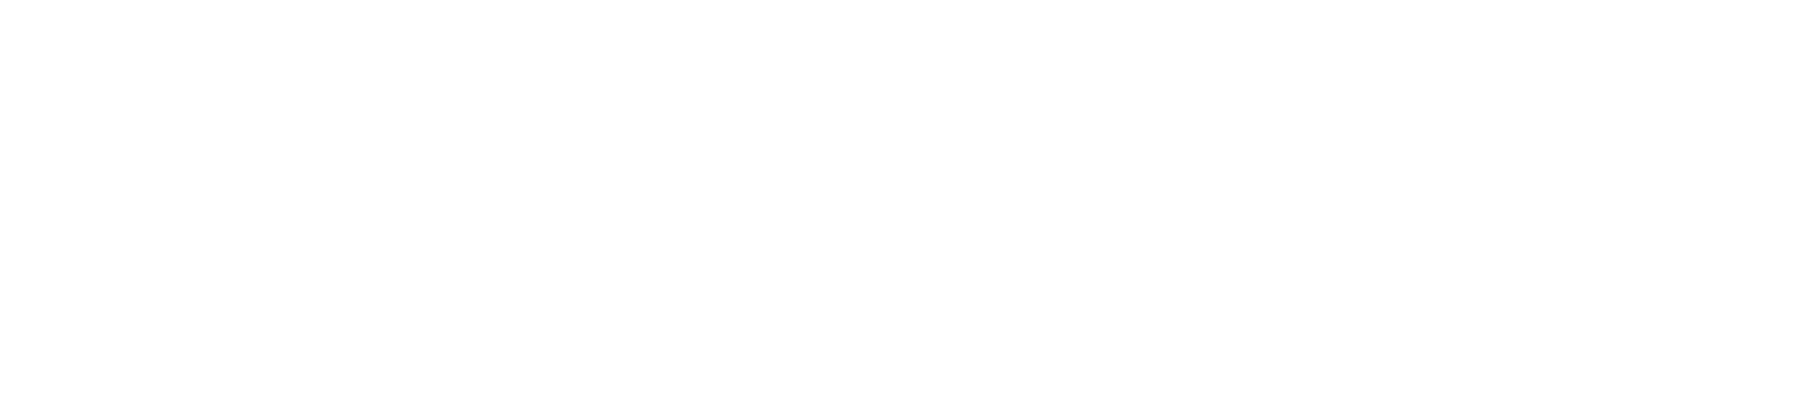 Psi Pi Group™